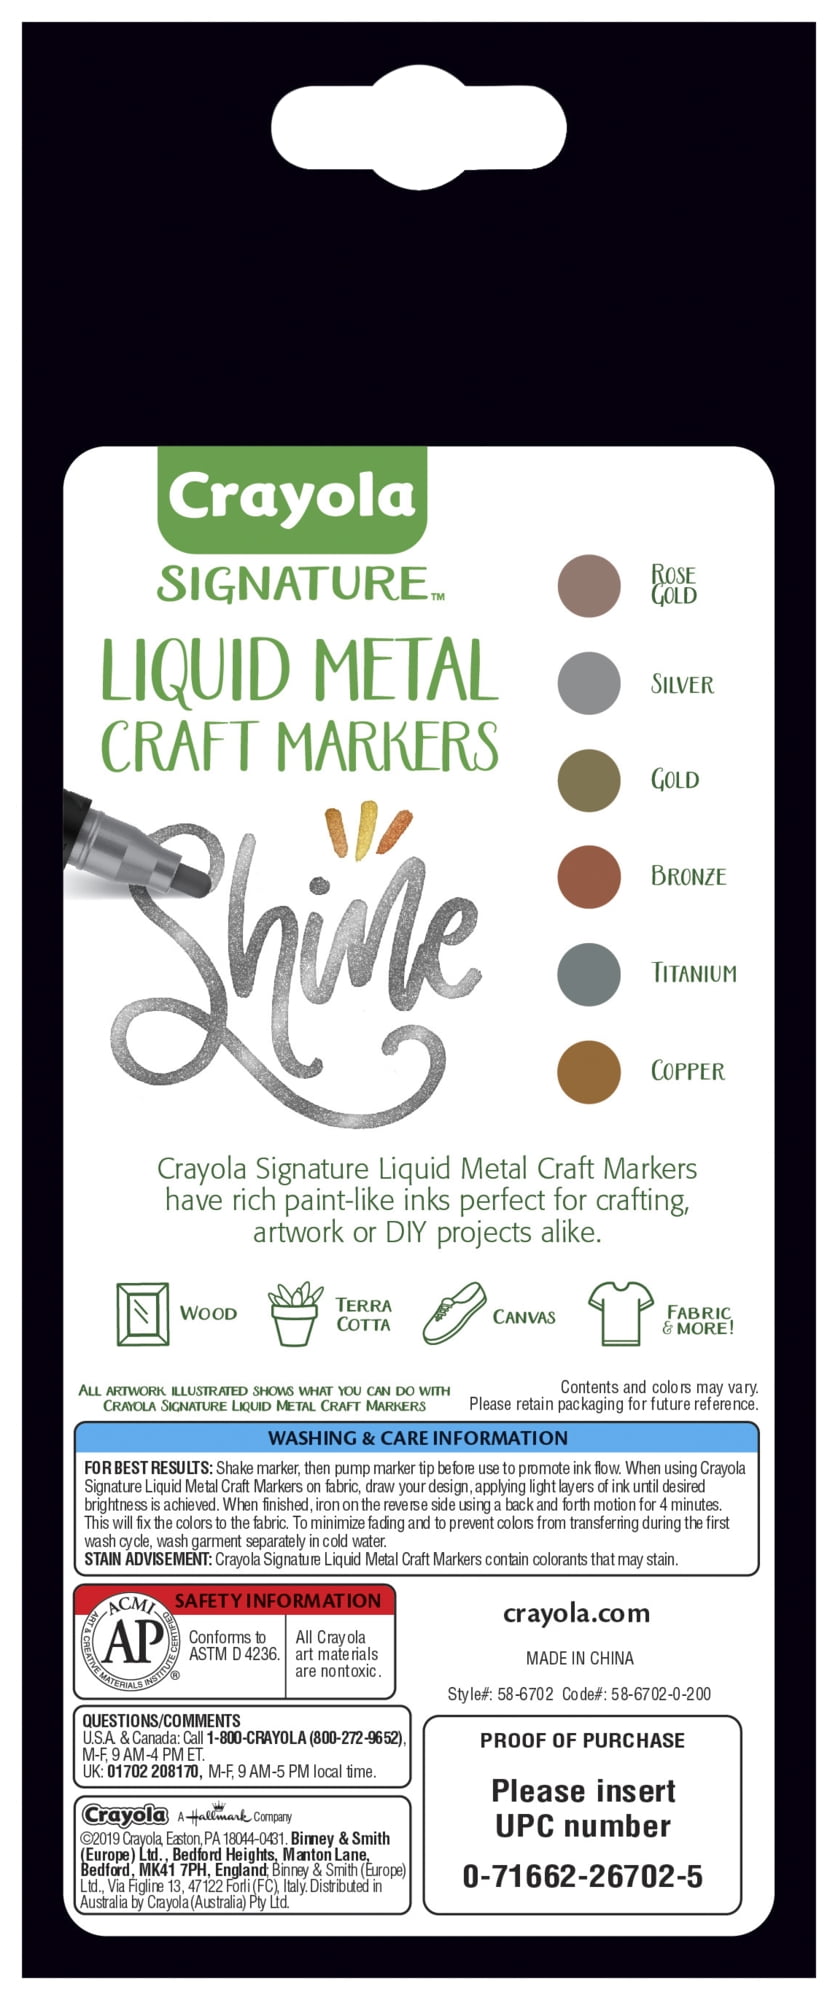 Crayola Signature Liquid Metal Craft Markers